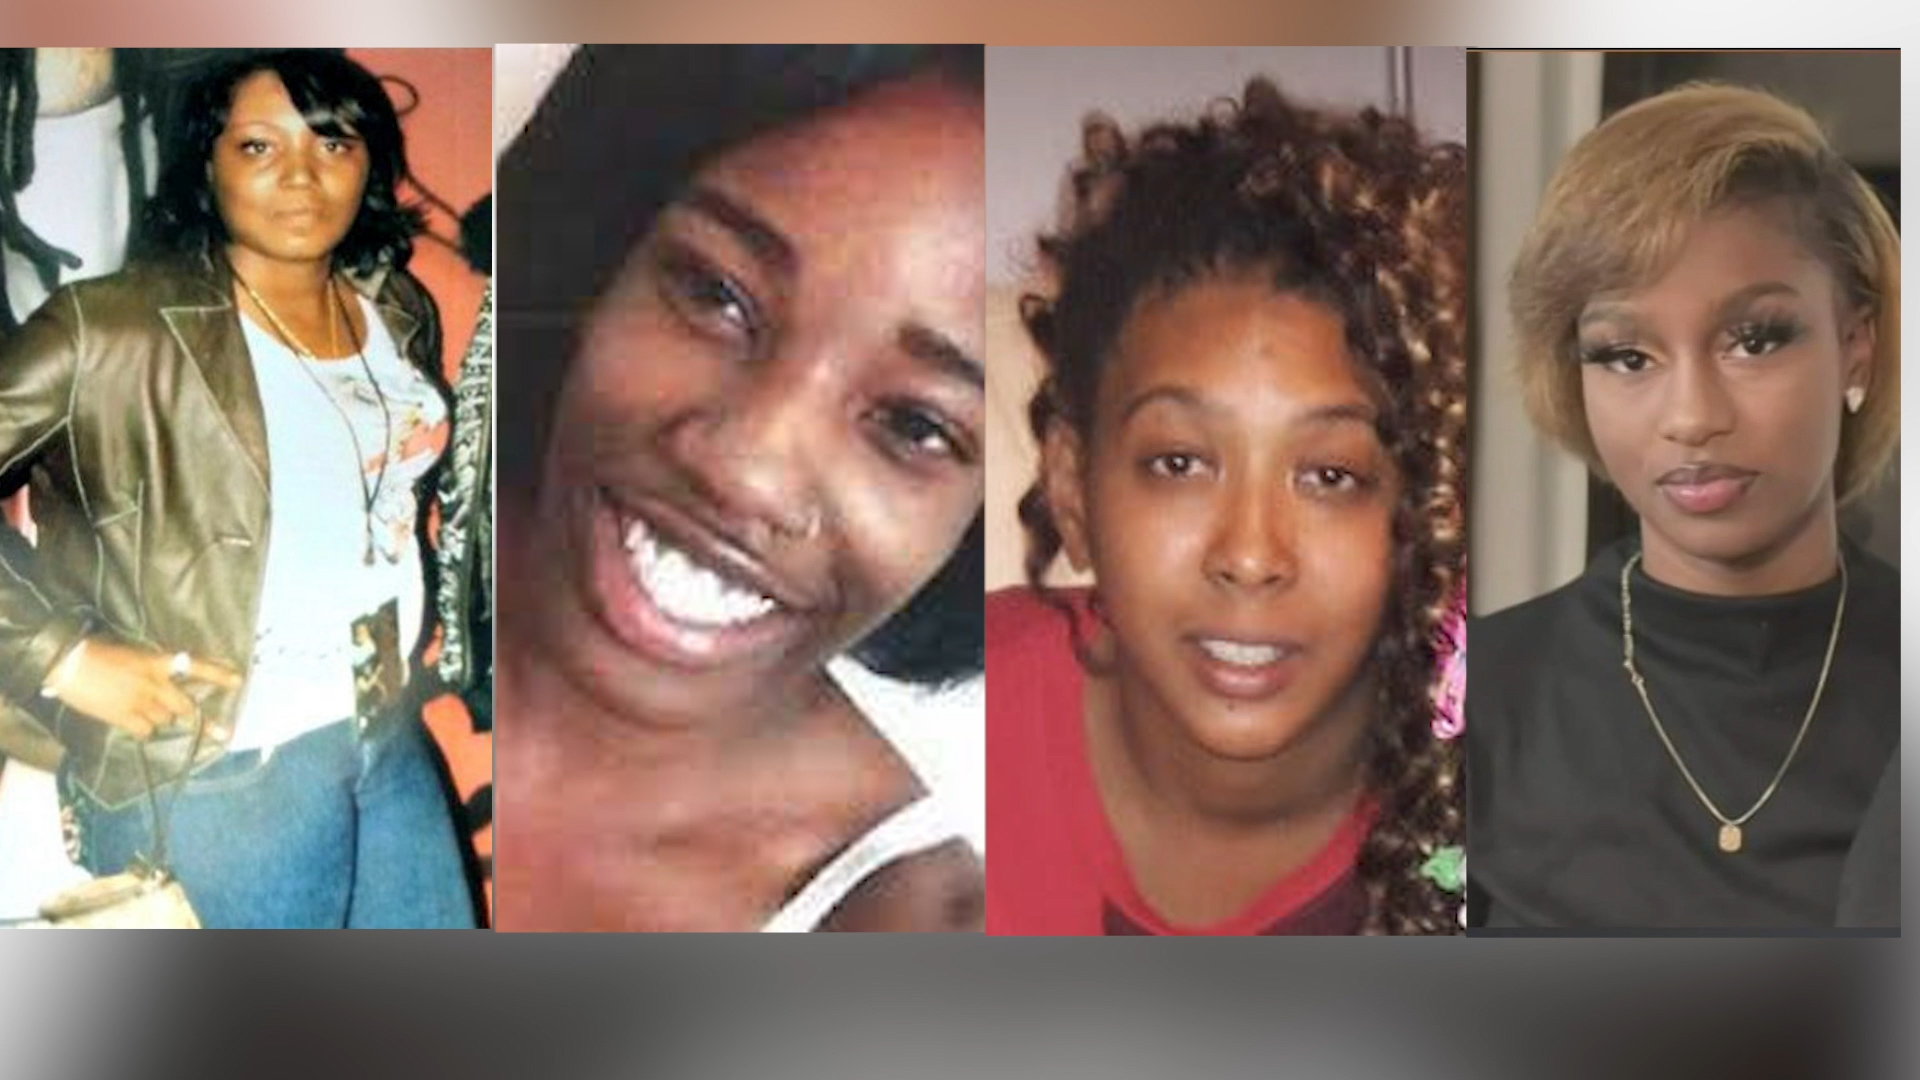 Search Effort To Find Zion Foster, Missing Detroit Women